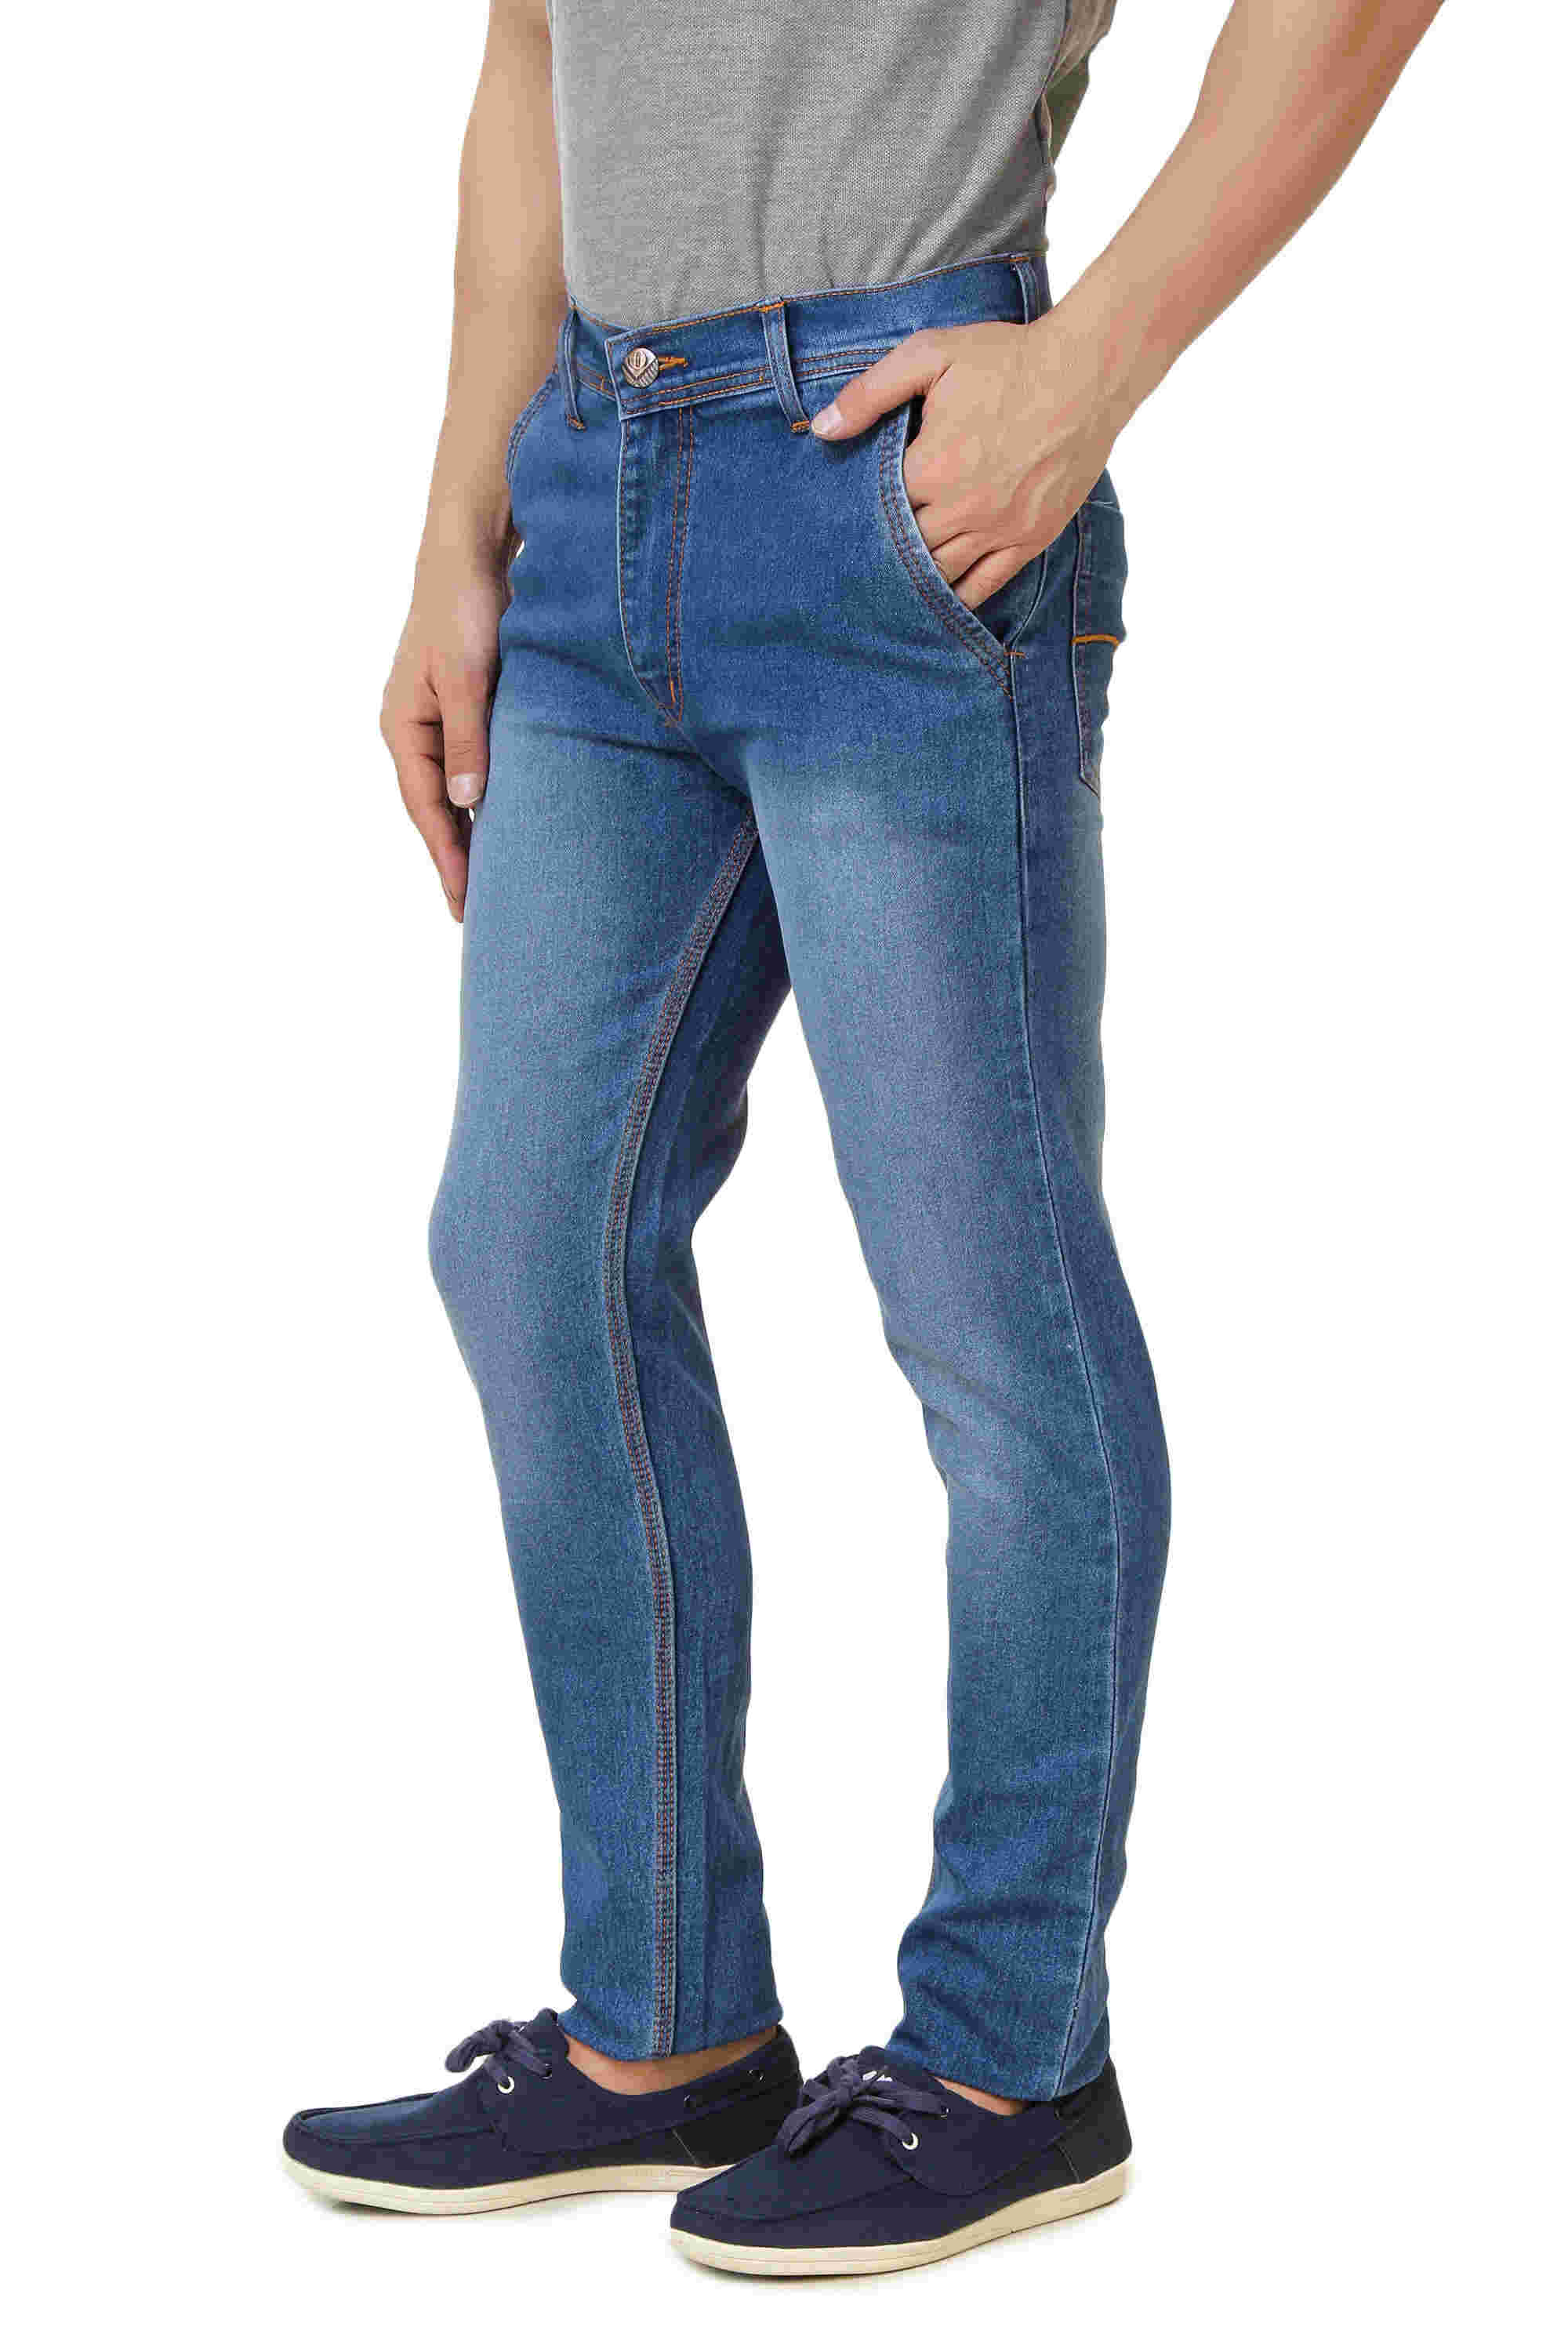 Buy Austin-M Blue Fit Denim Jeans Online @ ₹659 from ShopClues